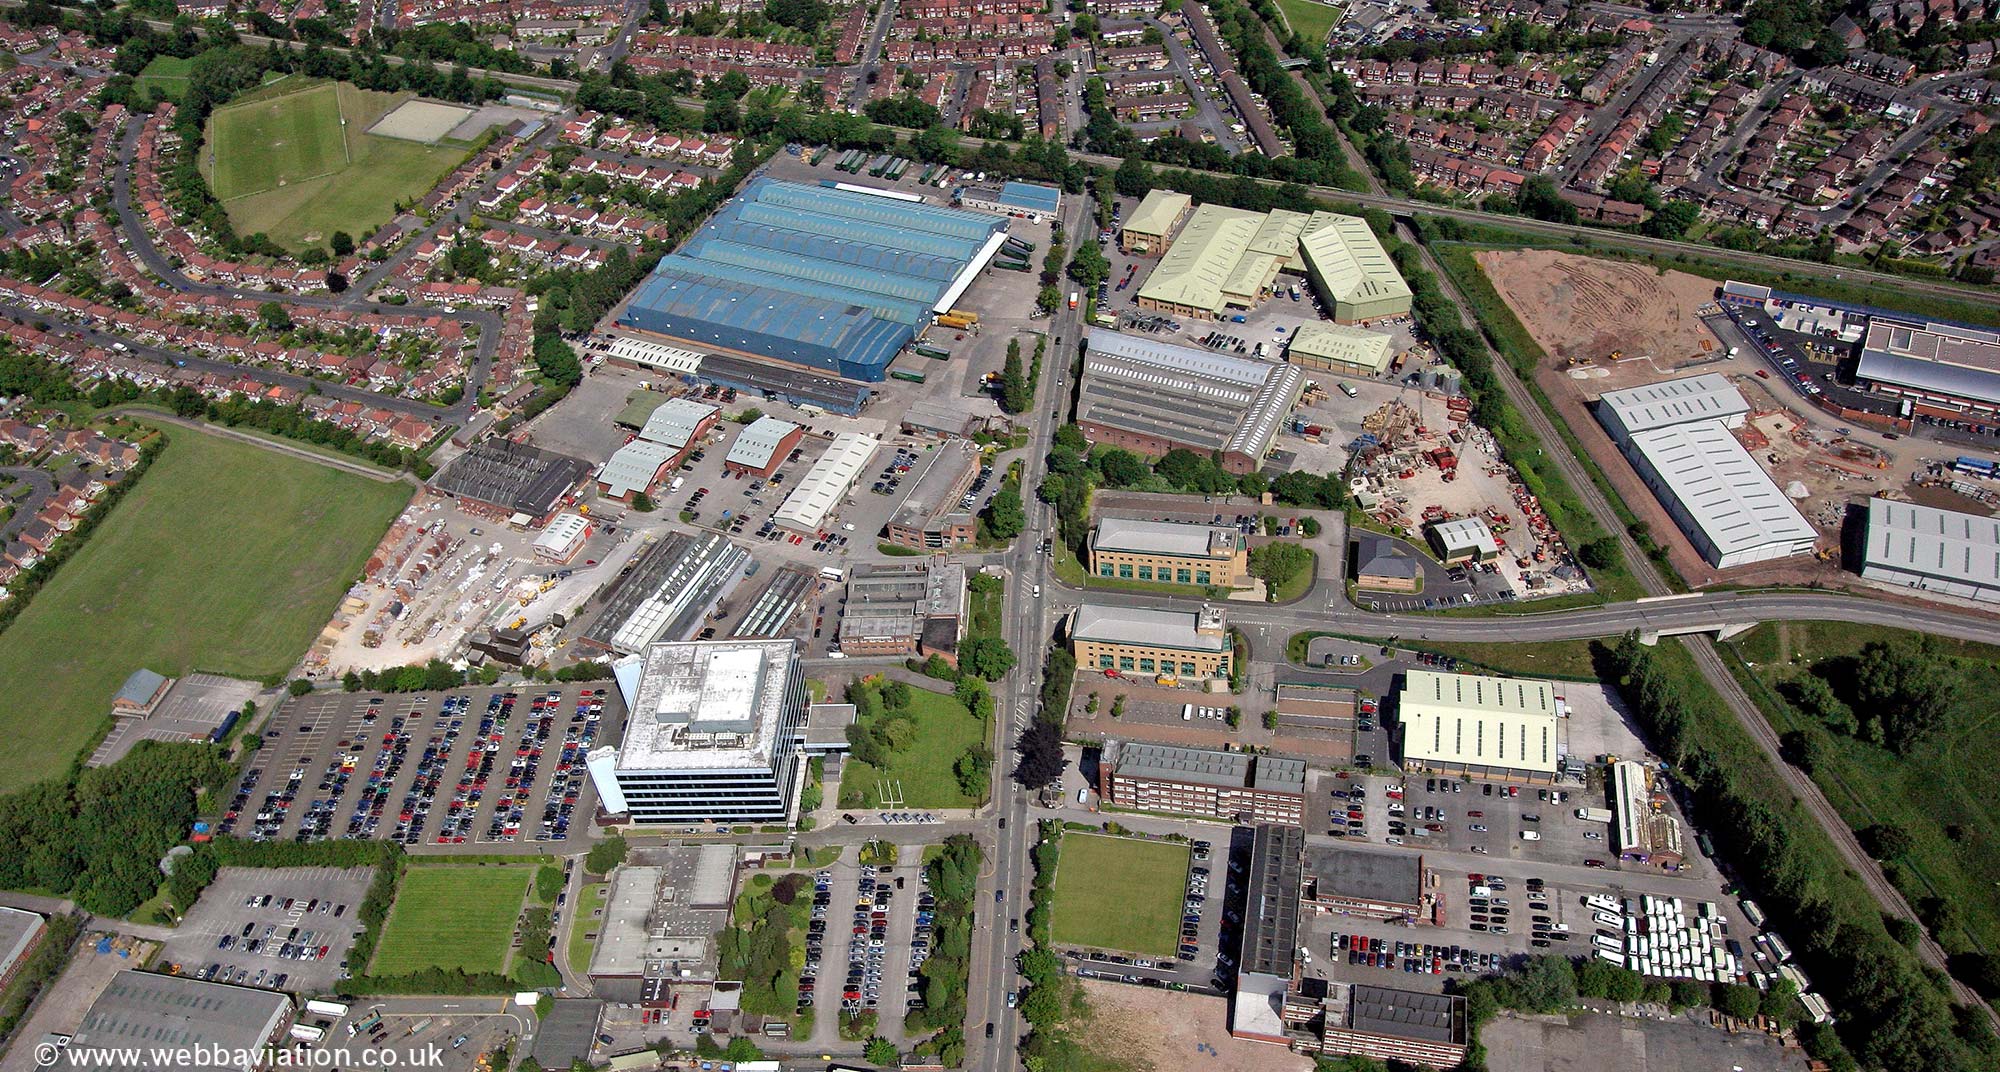 Cheadle Heath Stockport Cheshire aerial photograph | aerial photographs ...